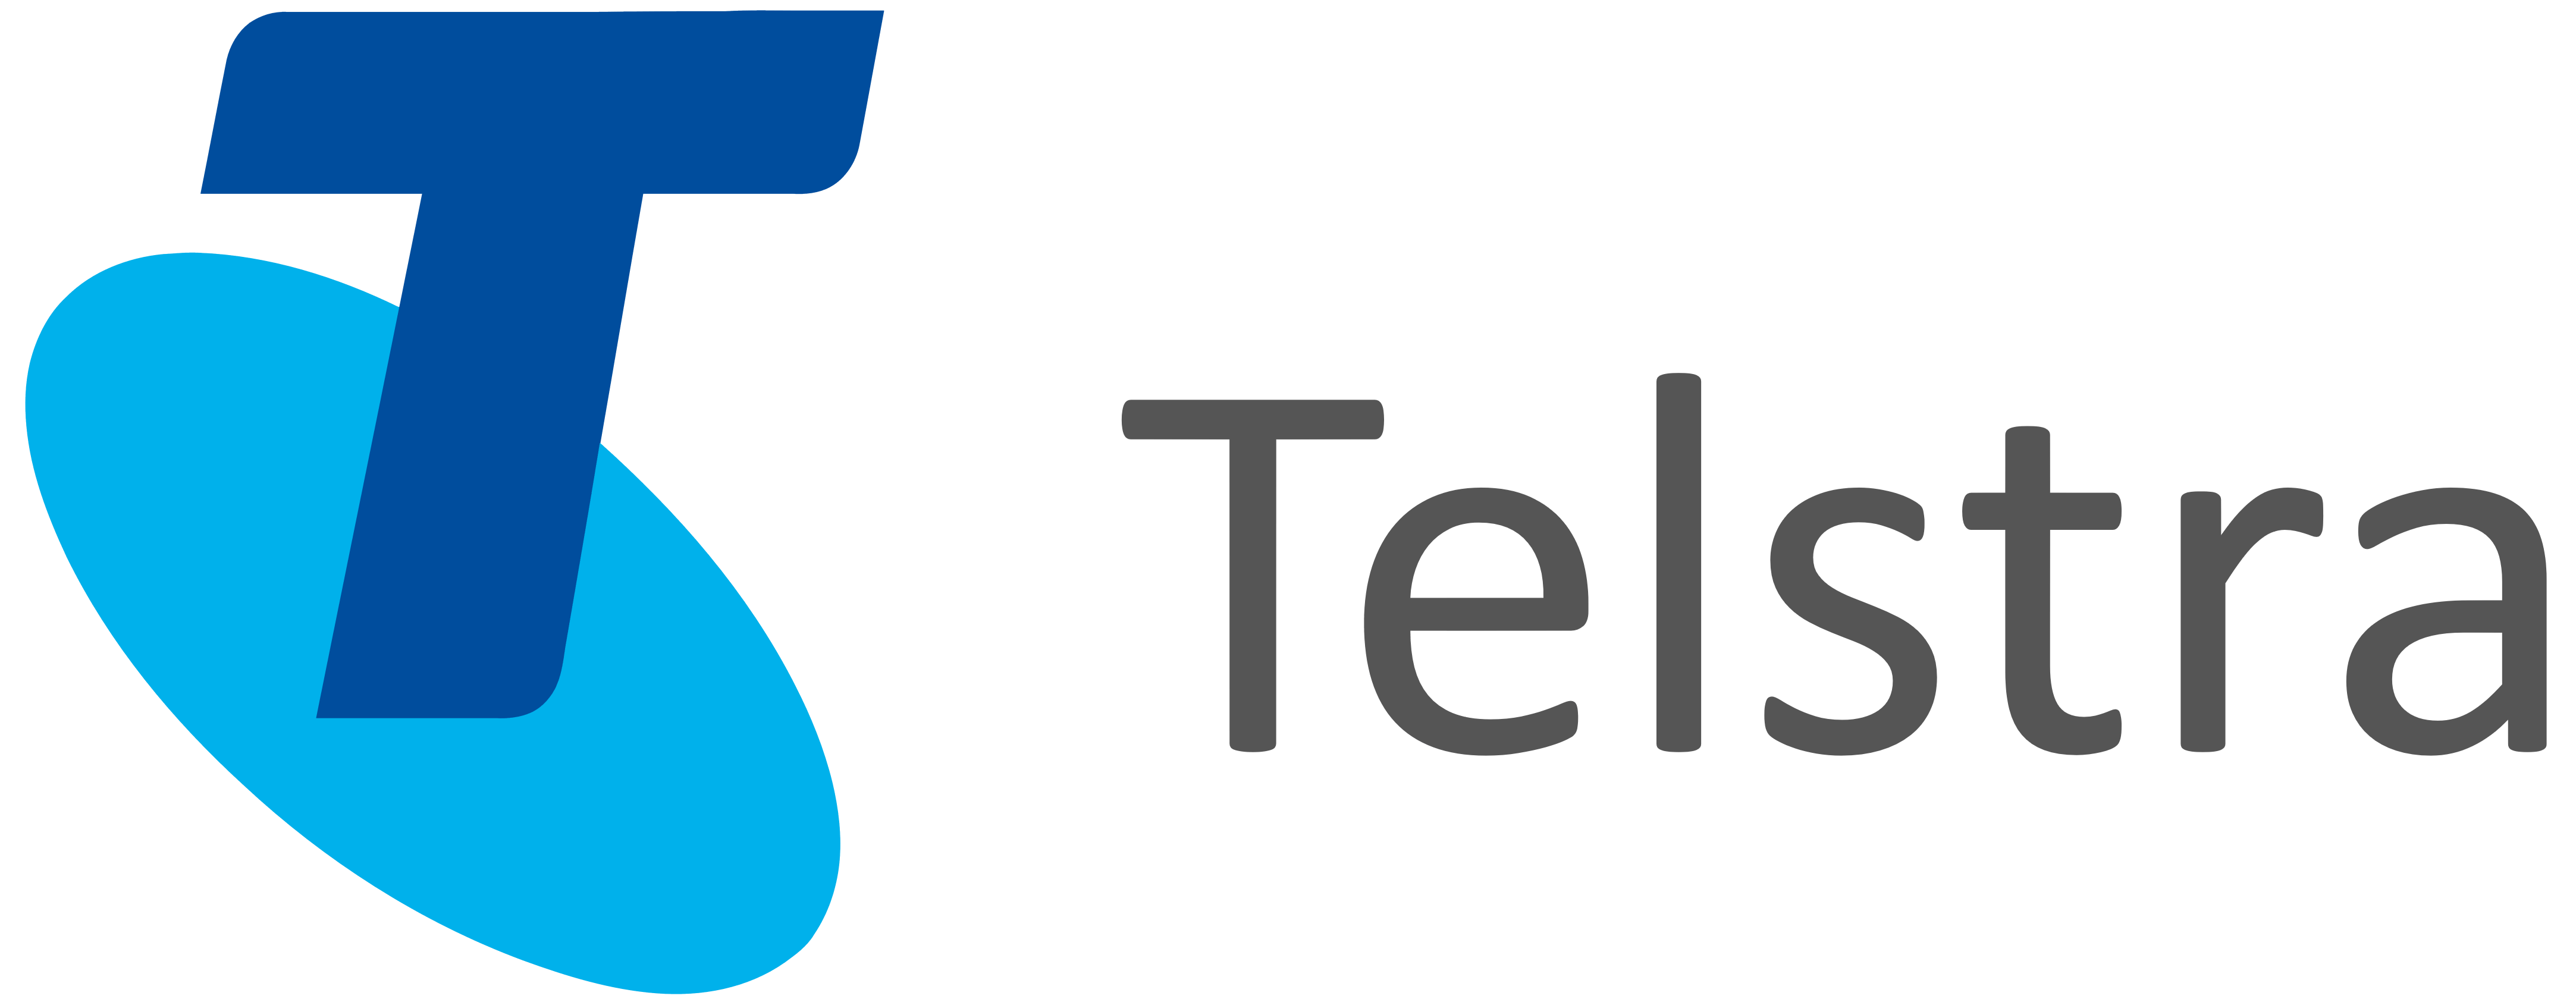 Telstra Logo - new-Telstra-logo-png-latest - Epsilon